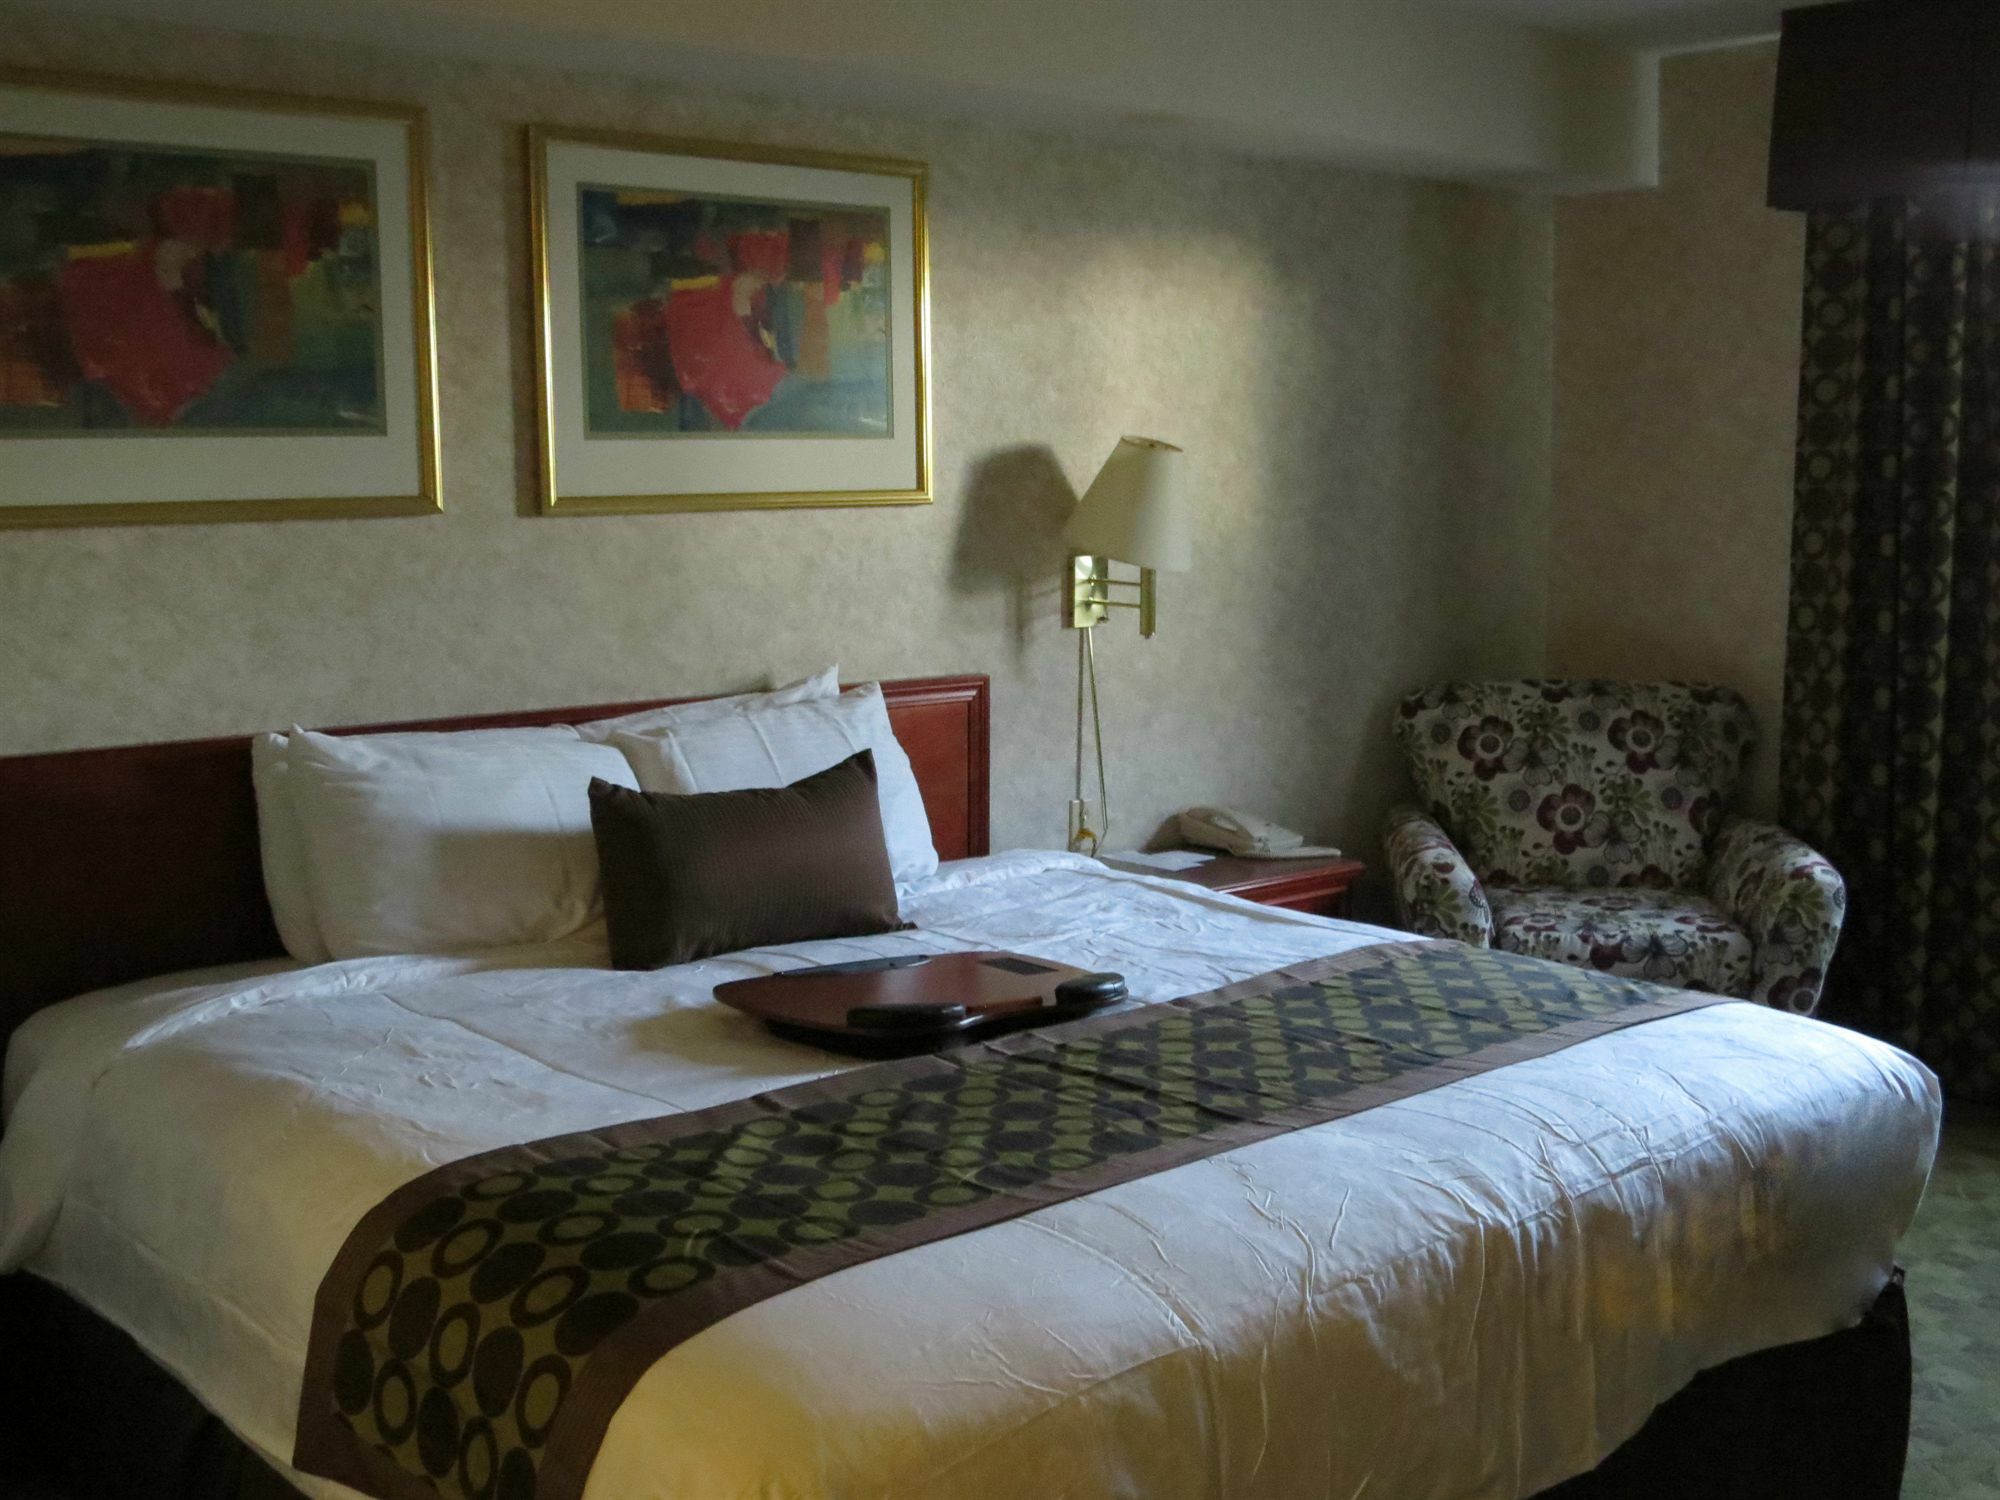 Lexington Inn & Suites-Windsor Exterior photo